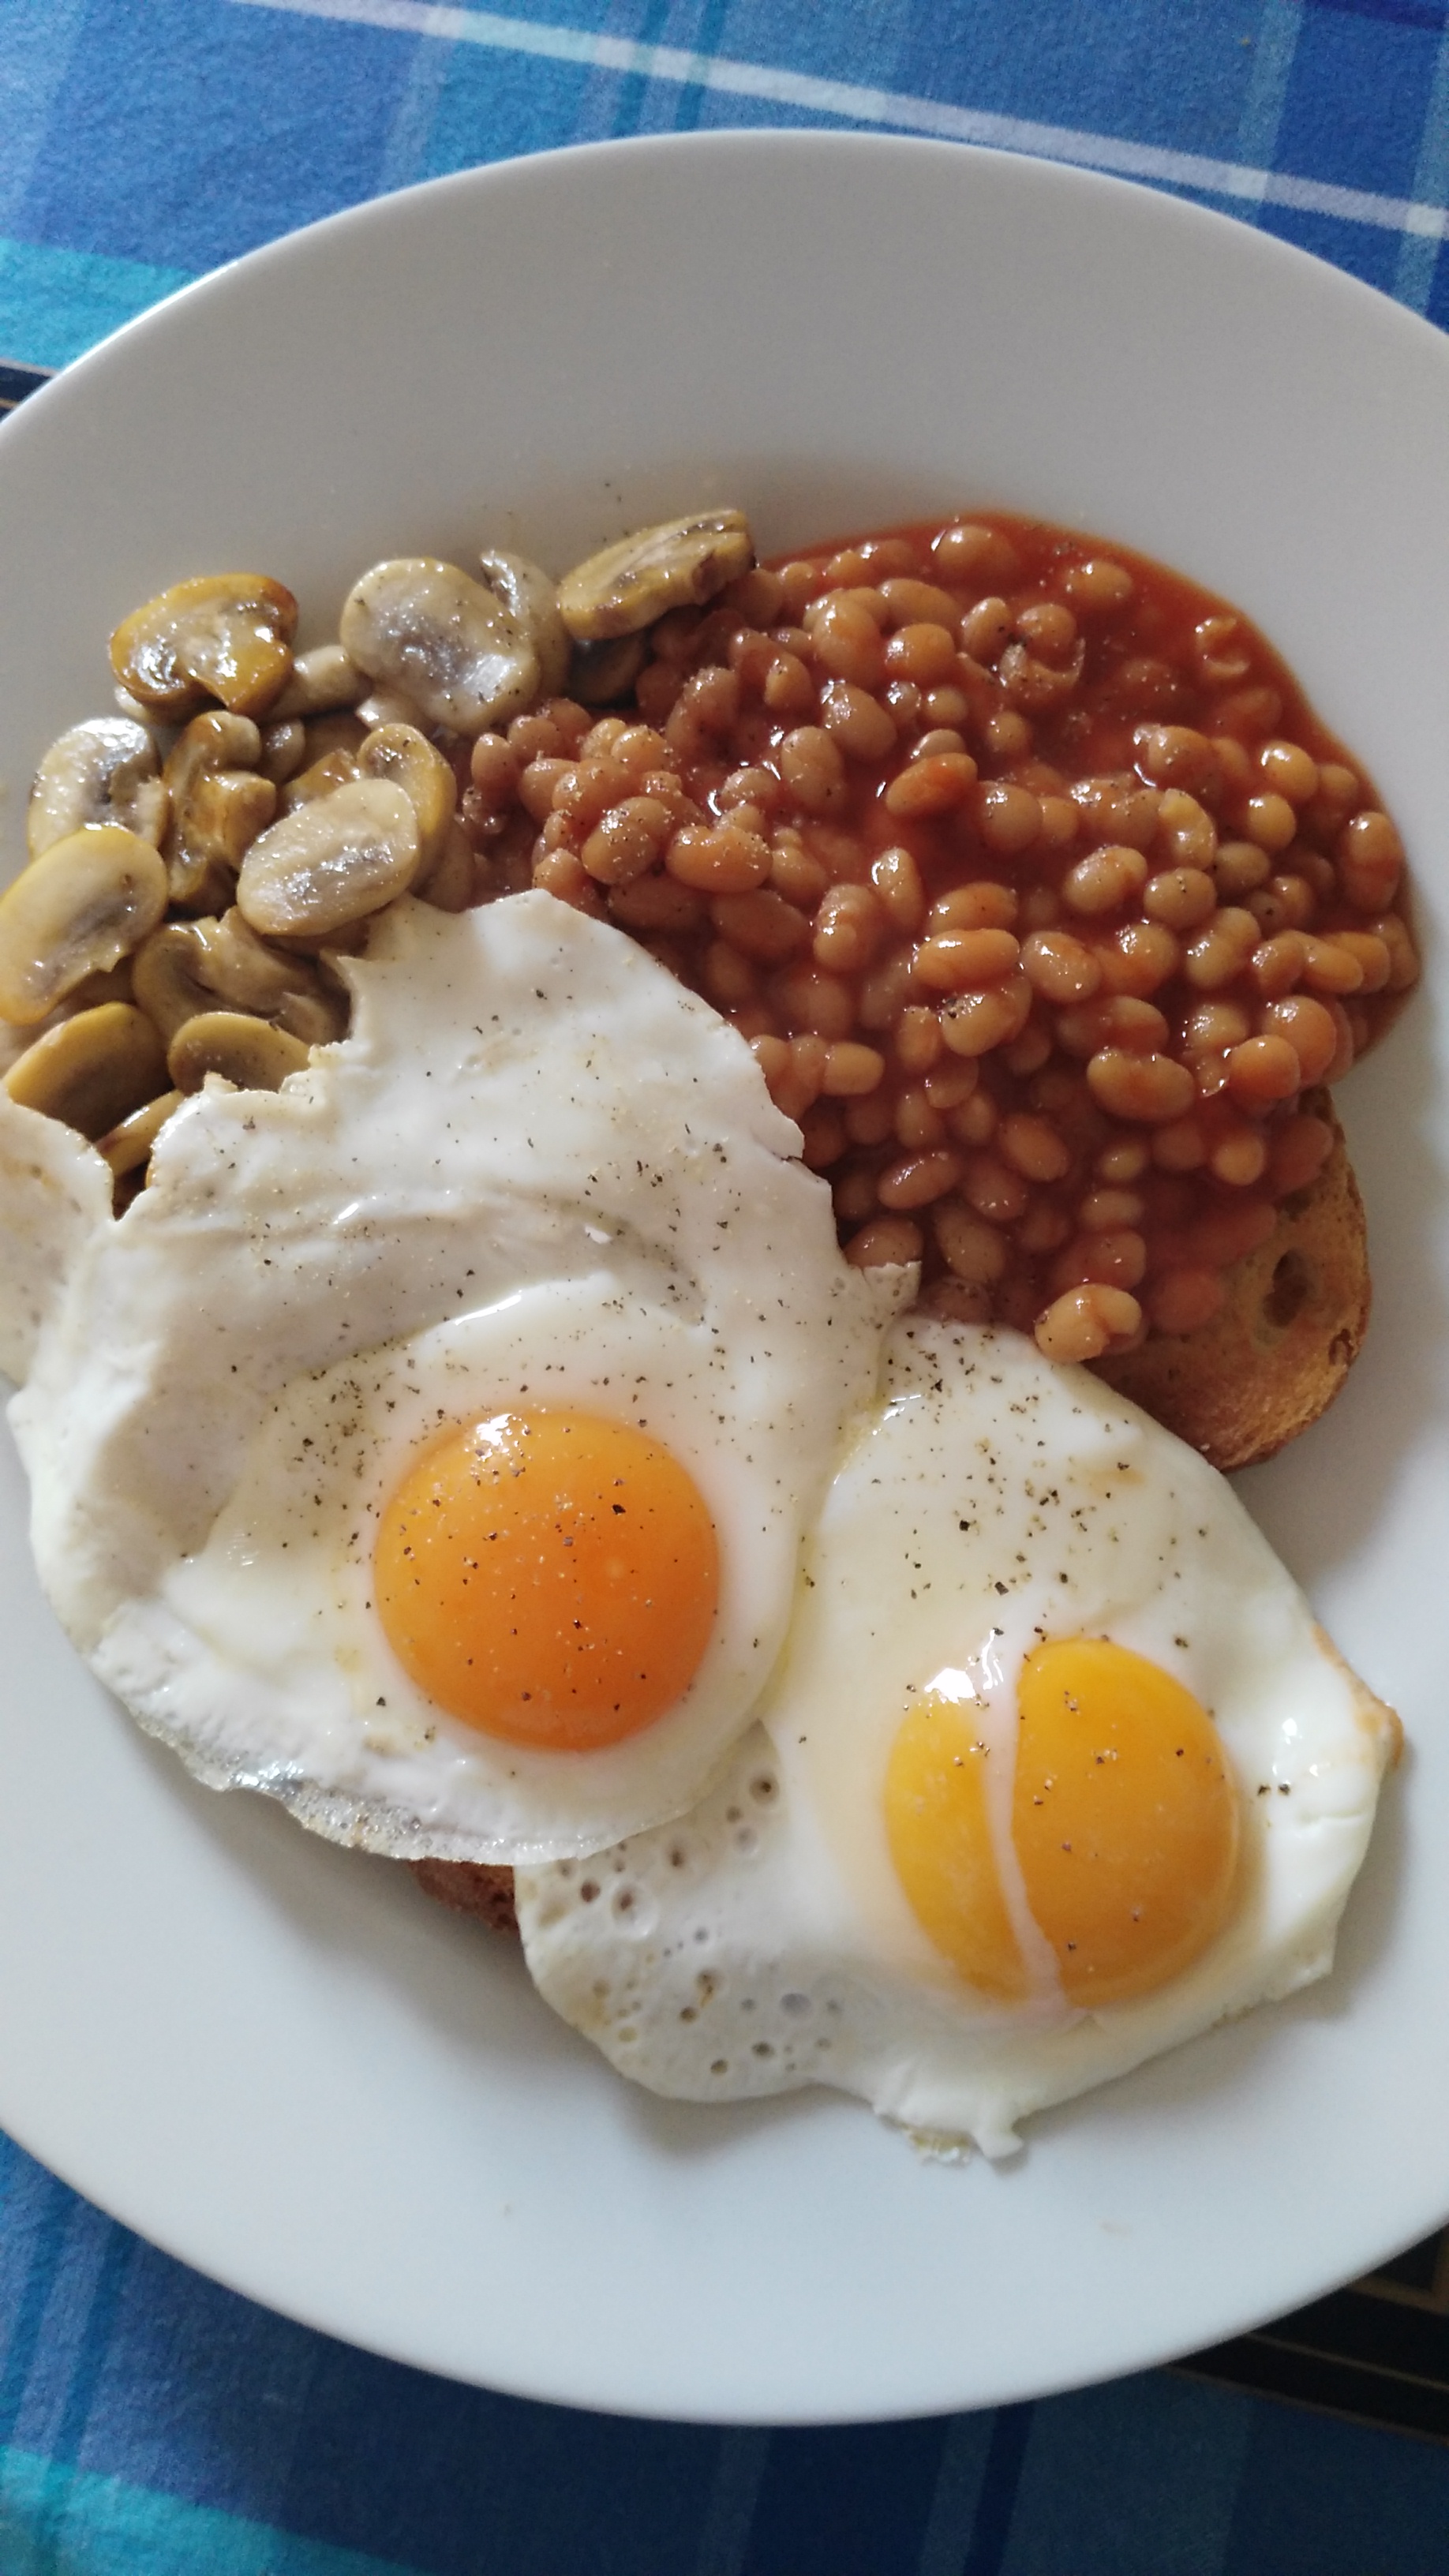 The Great Breakfast photo thread - Page 463 - Food, Drink & Restaurants - PistonHeads